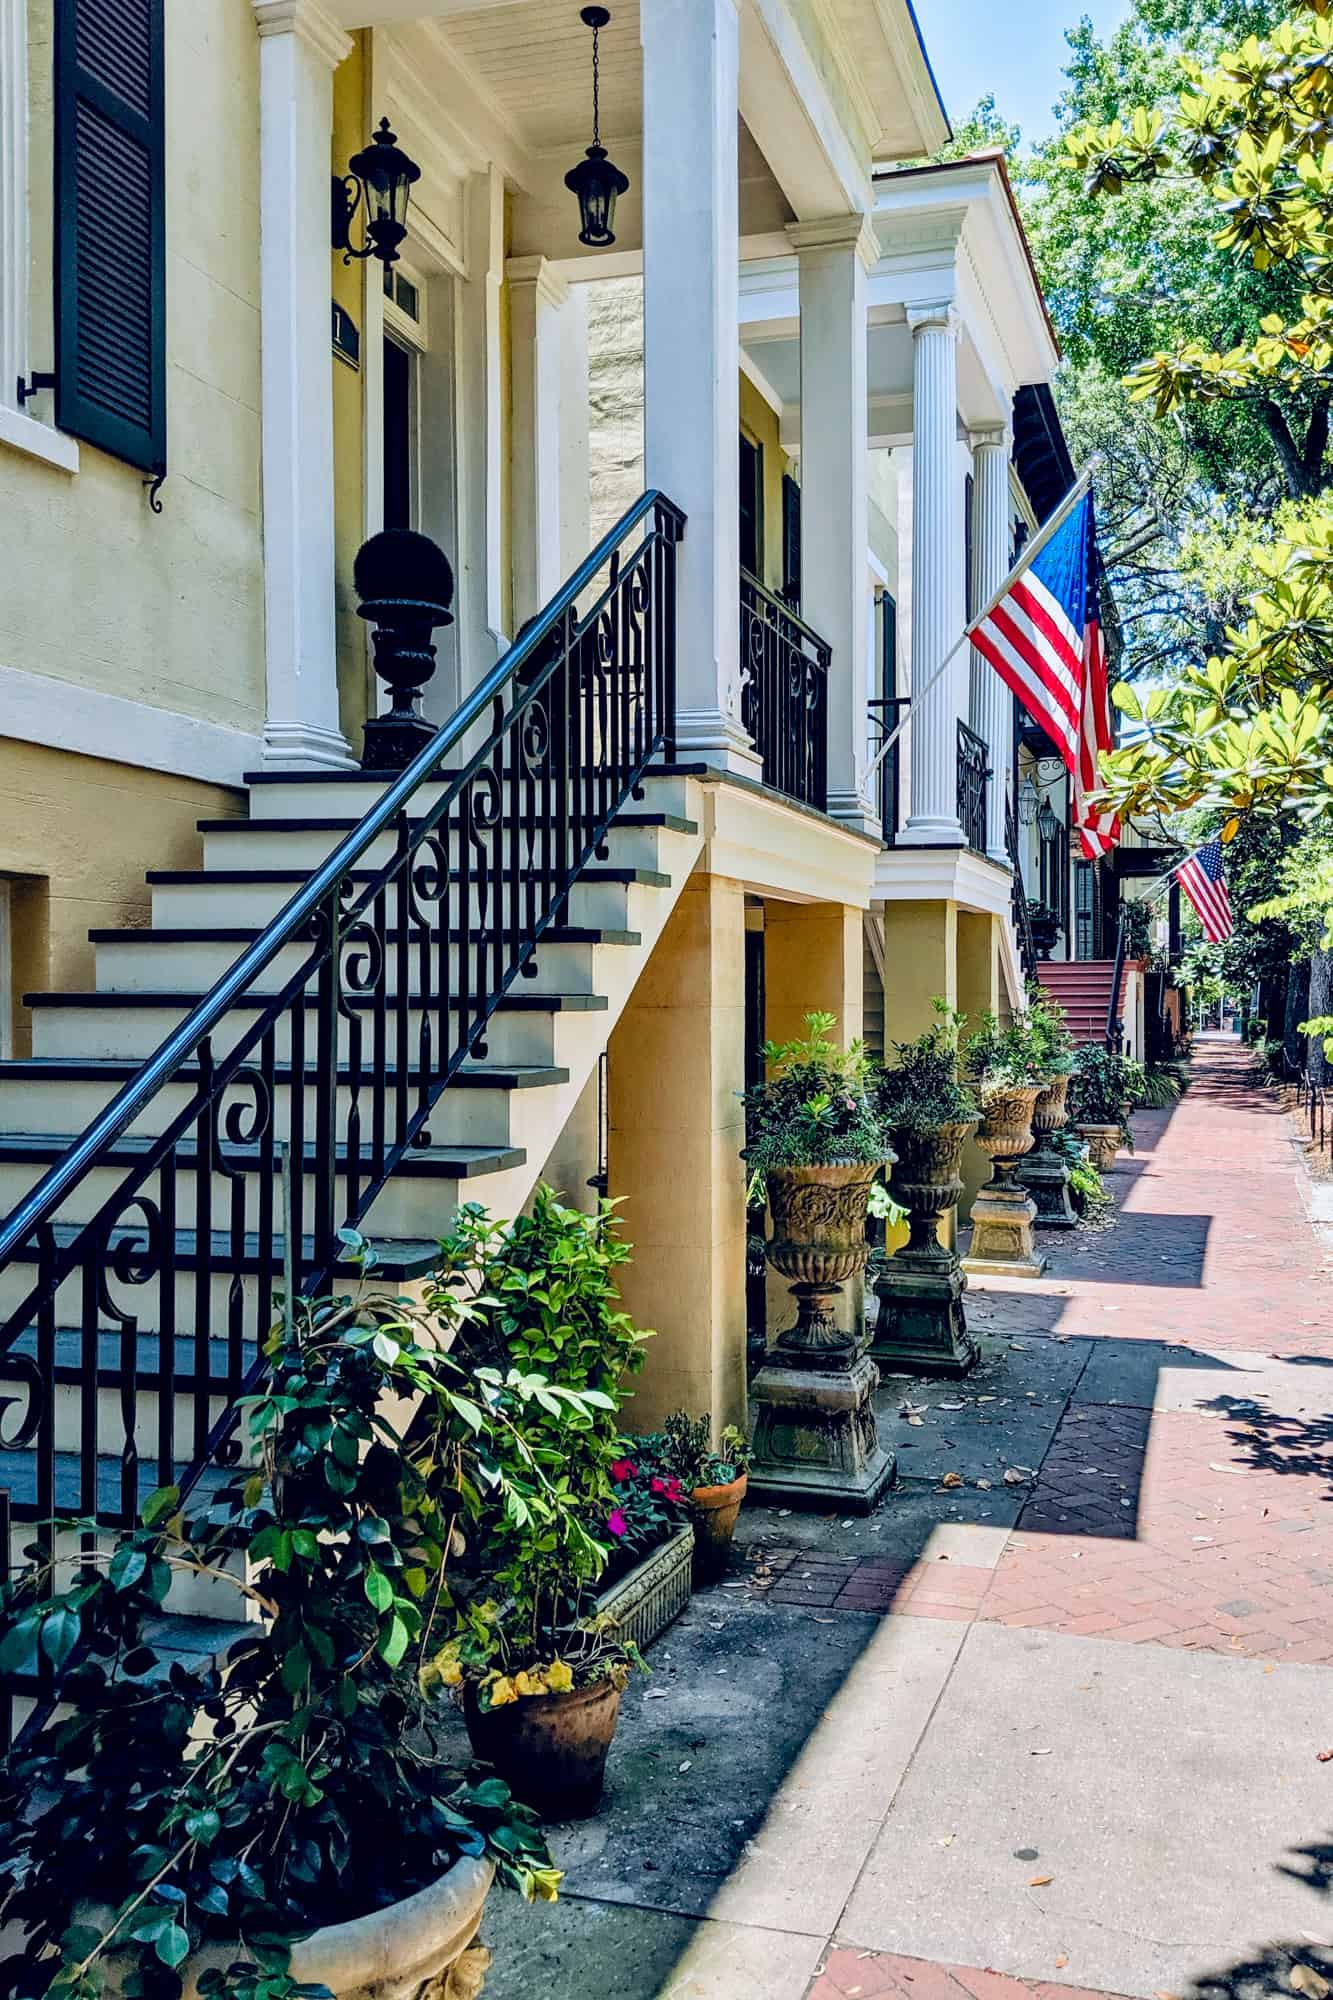 jones street in savannah, american flags hang outside historic homes along the tree lined sidewalk